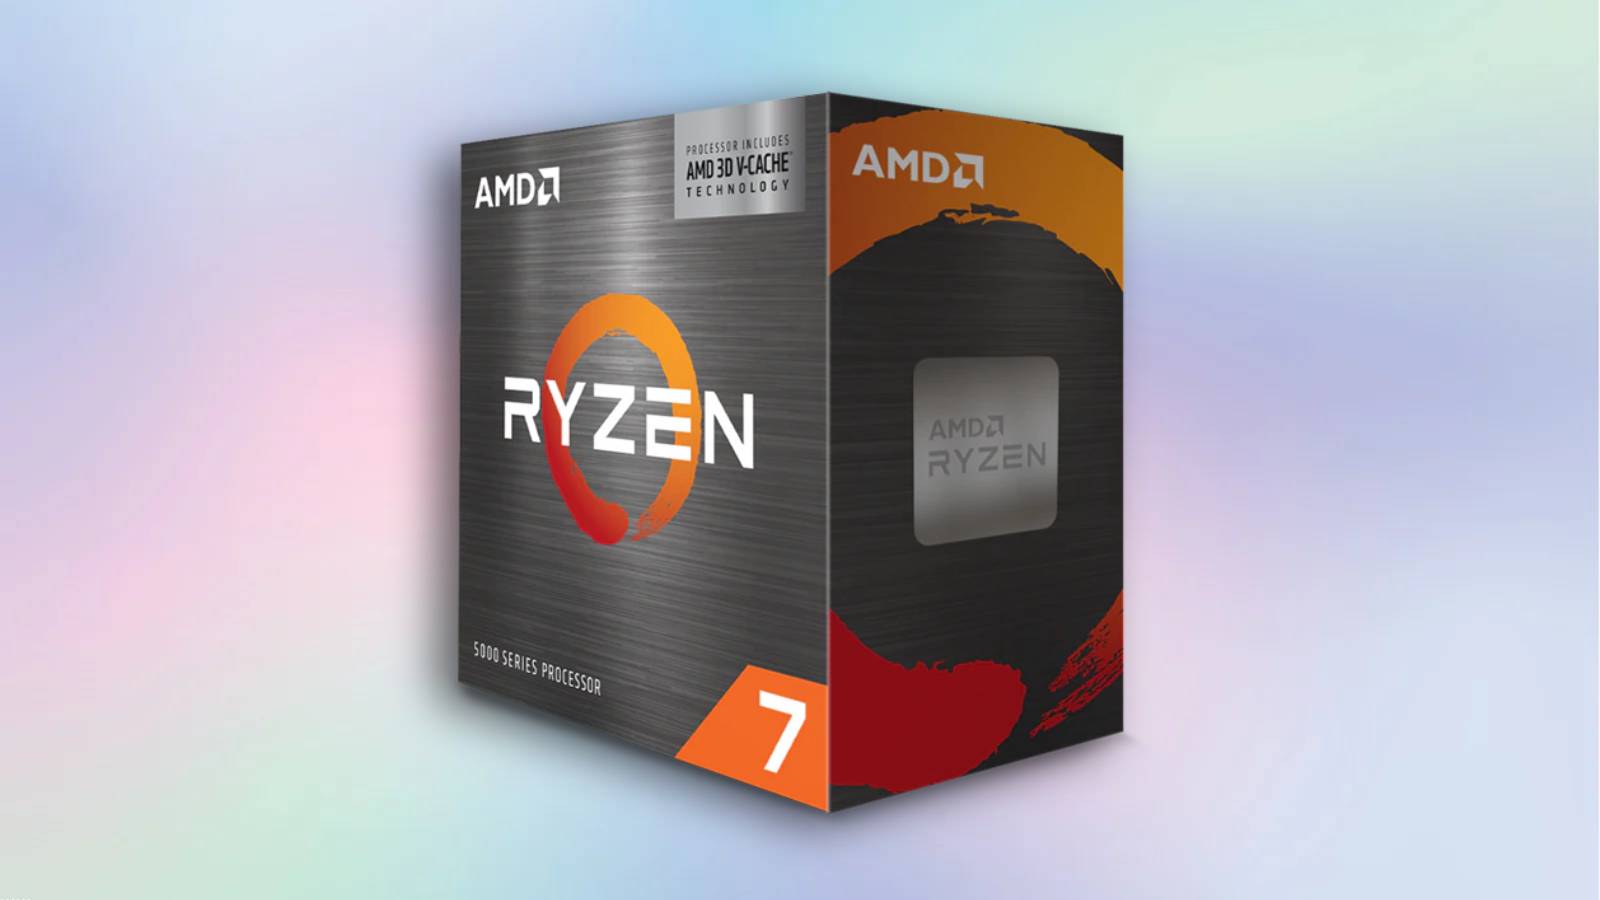 The AMD 5800X box